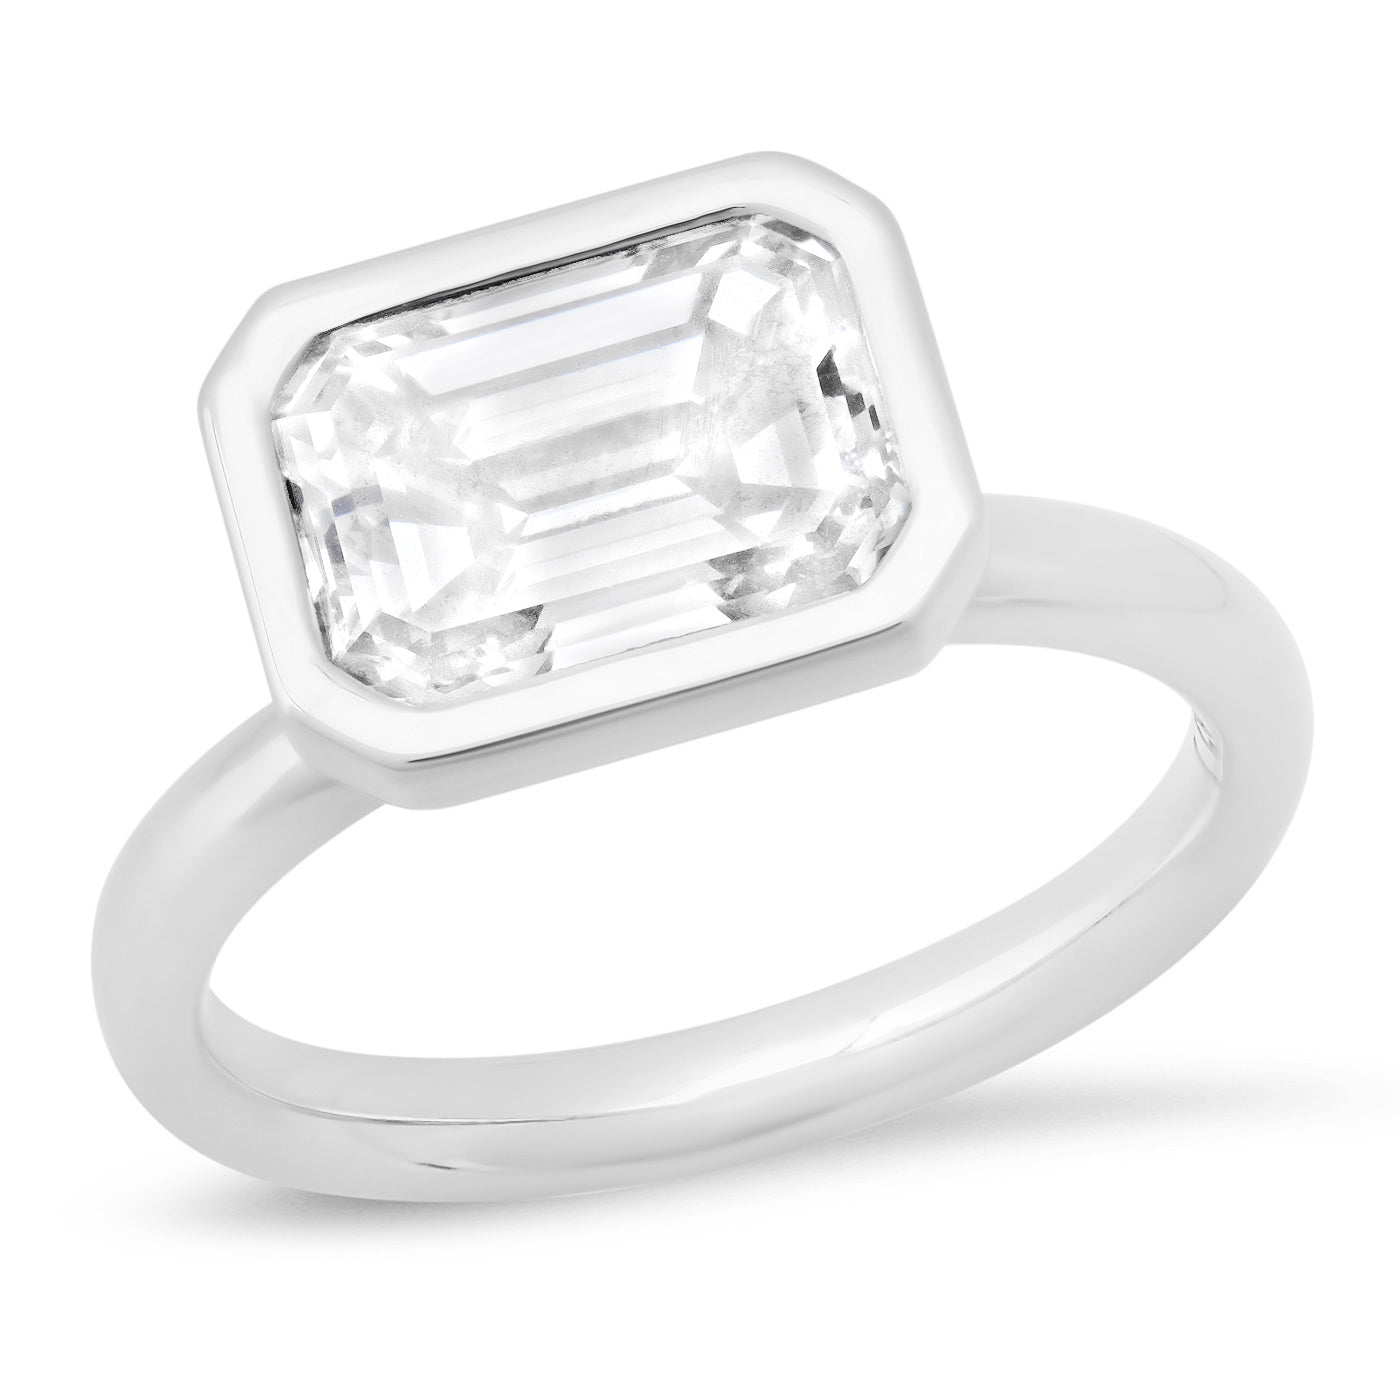 Sold - 2.41 Carat Emerald Cut Engagement Ring